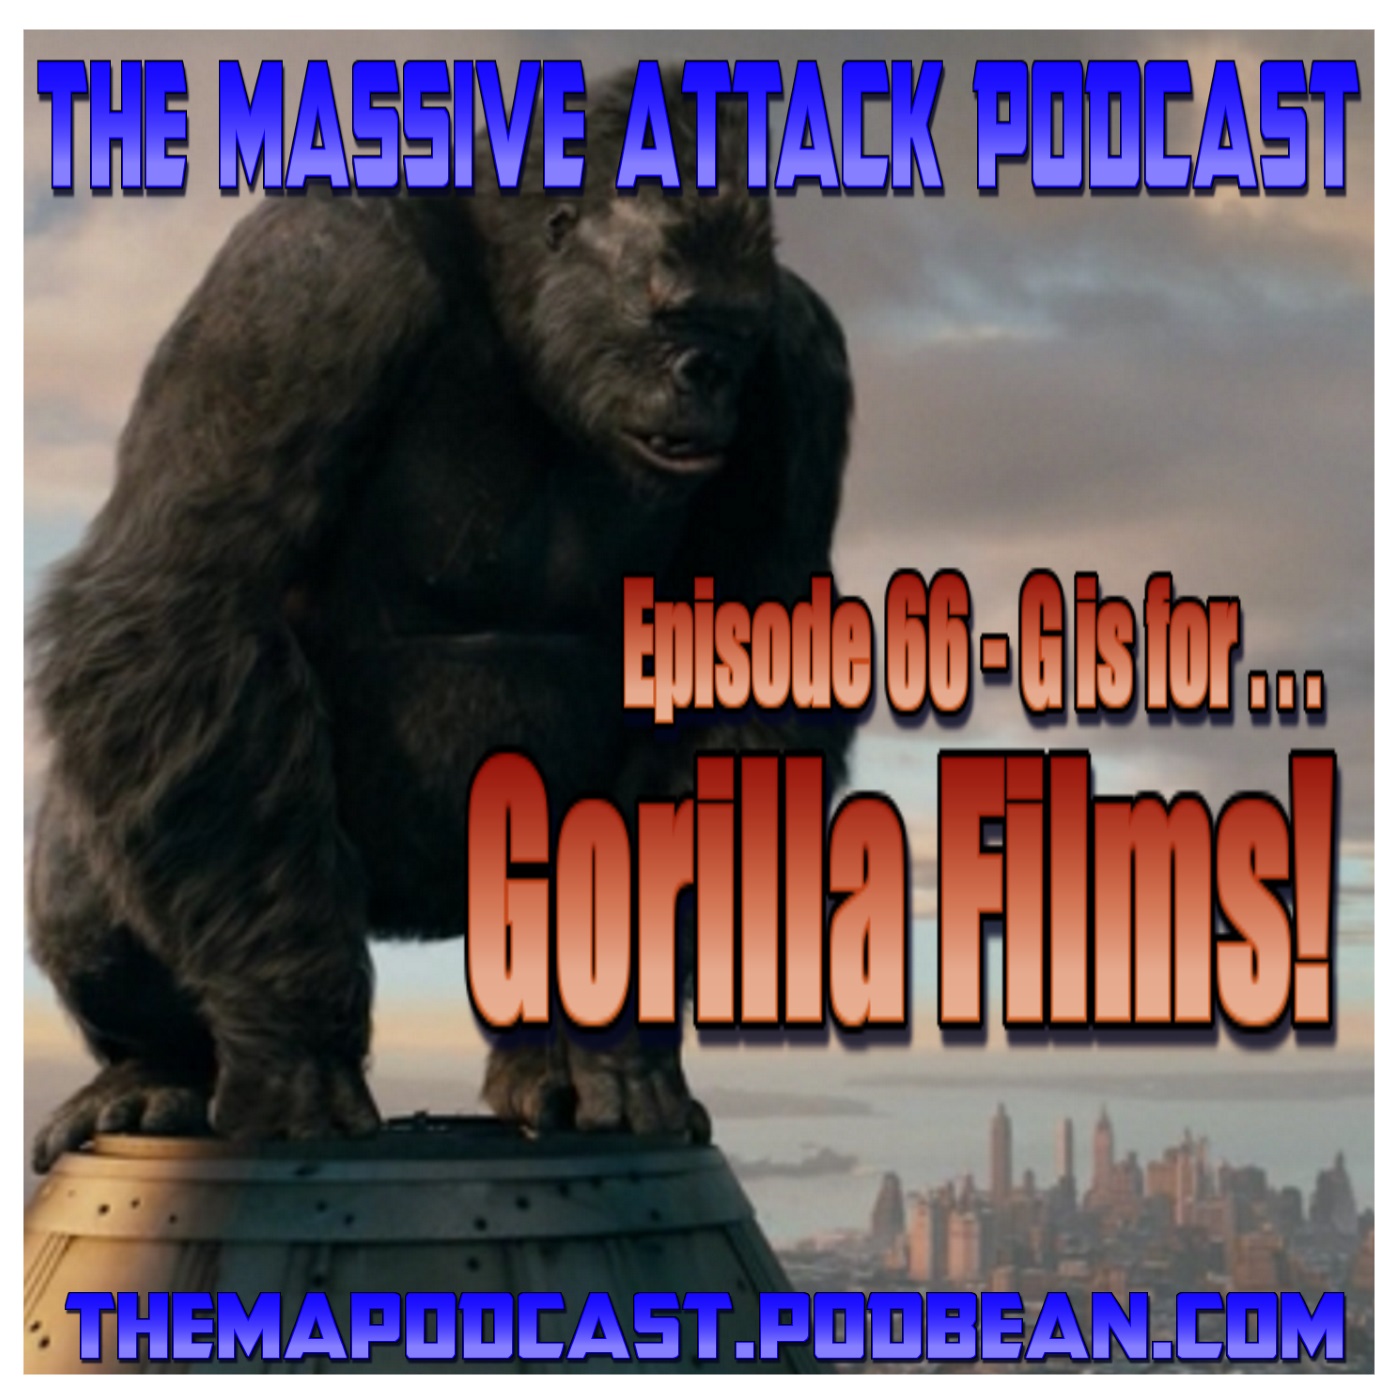 Episode 66 - G is for Gorilla Films!